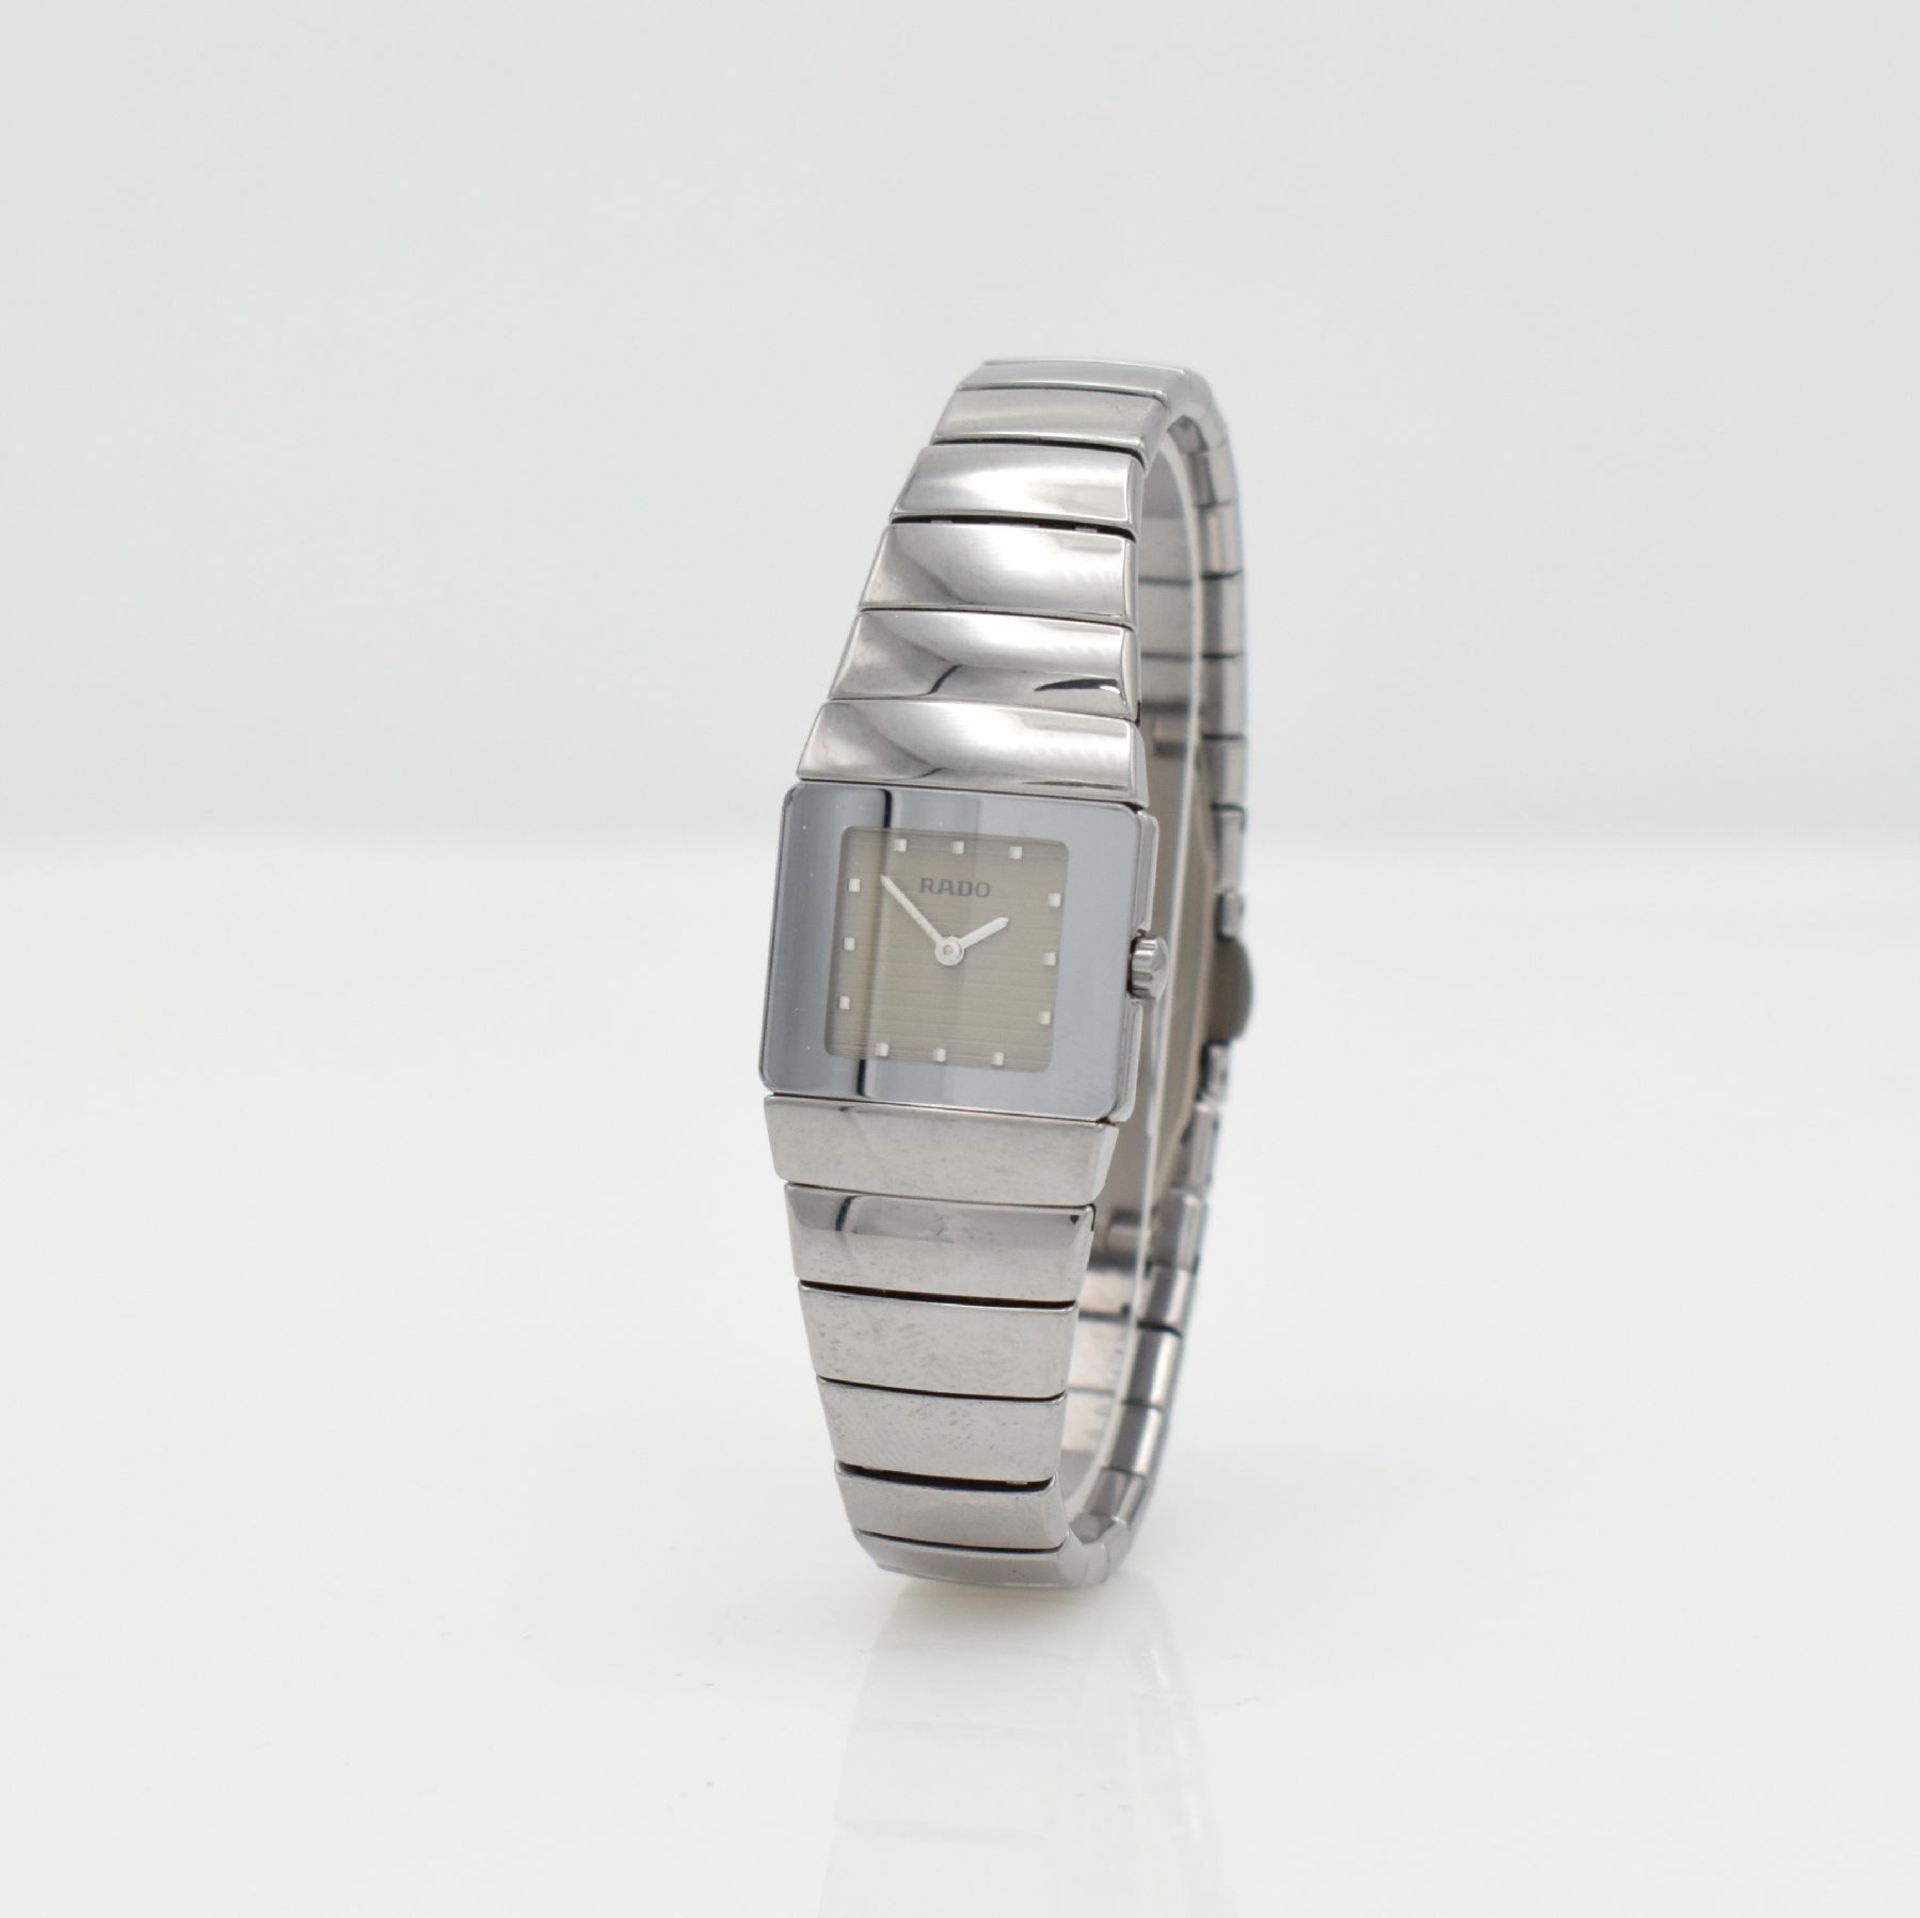 RADO Diastar ladies wristwatch, Switzerland around 2005, quartz, reference 153.0334.3, ceramic - Bild 3 aus 6